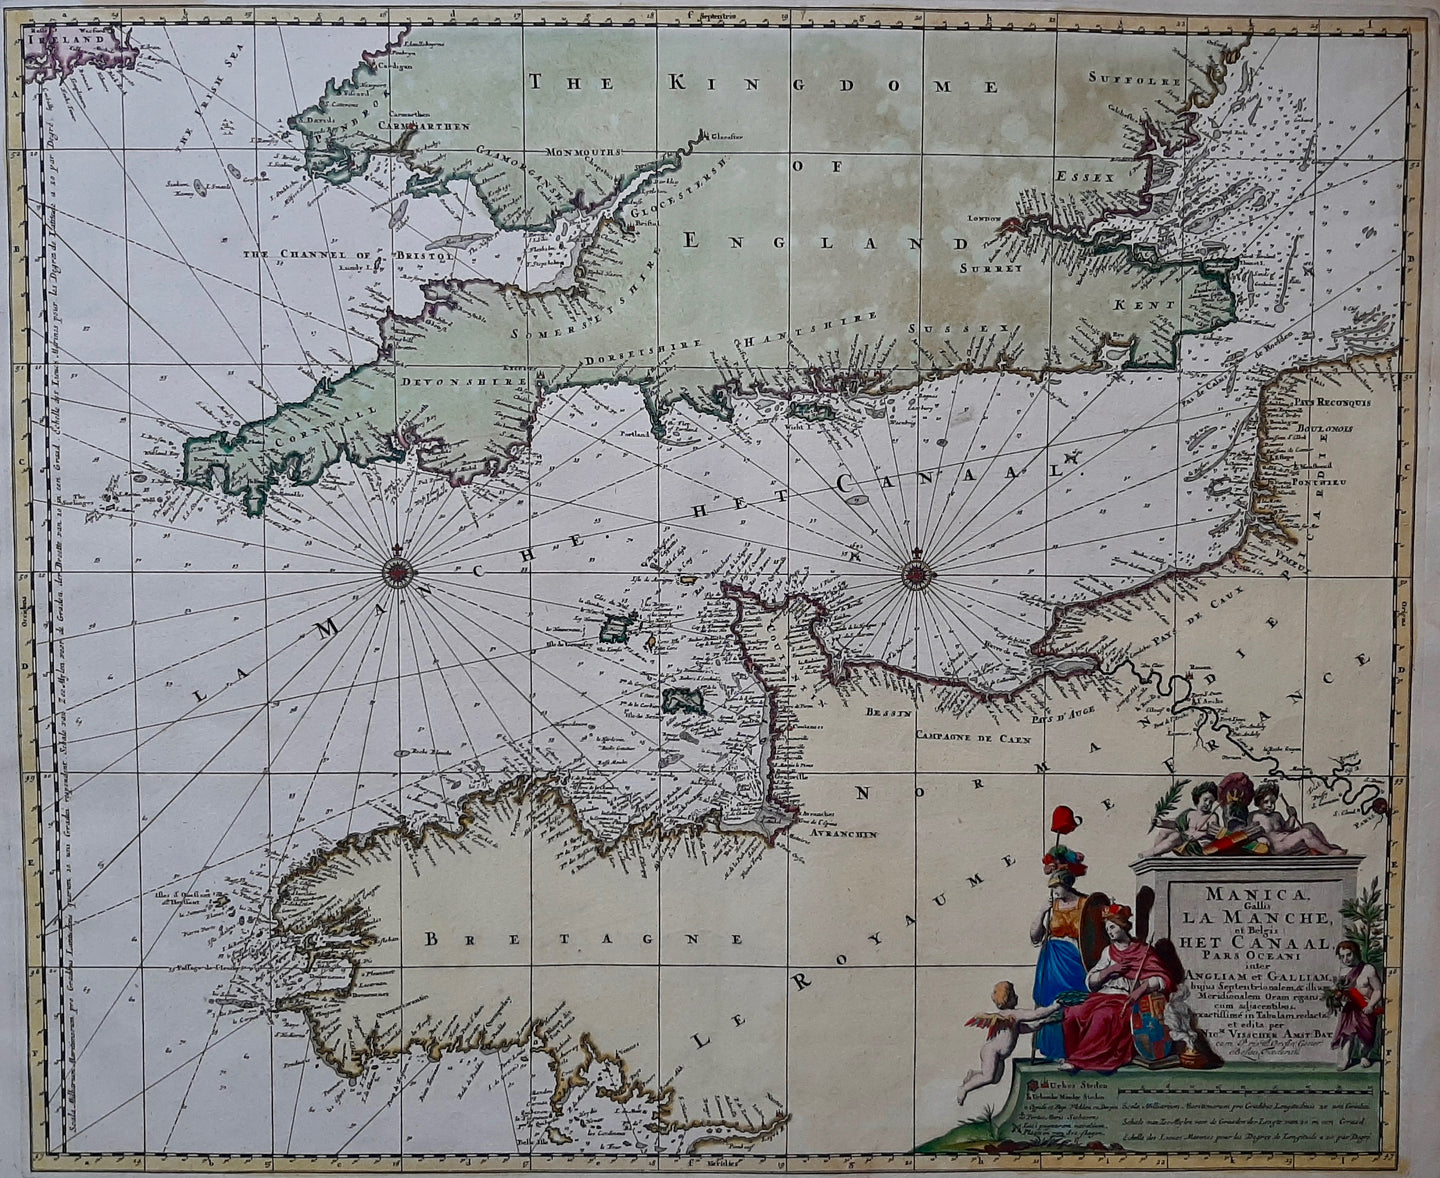 Frankrijk Engeland Zeekaart Het Kanaal La Manche The English Channel France England Chart - Nicolaes Visscher - circa 1690